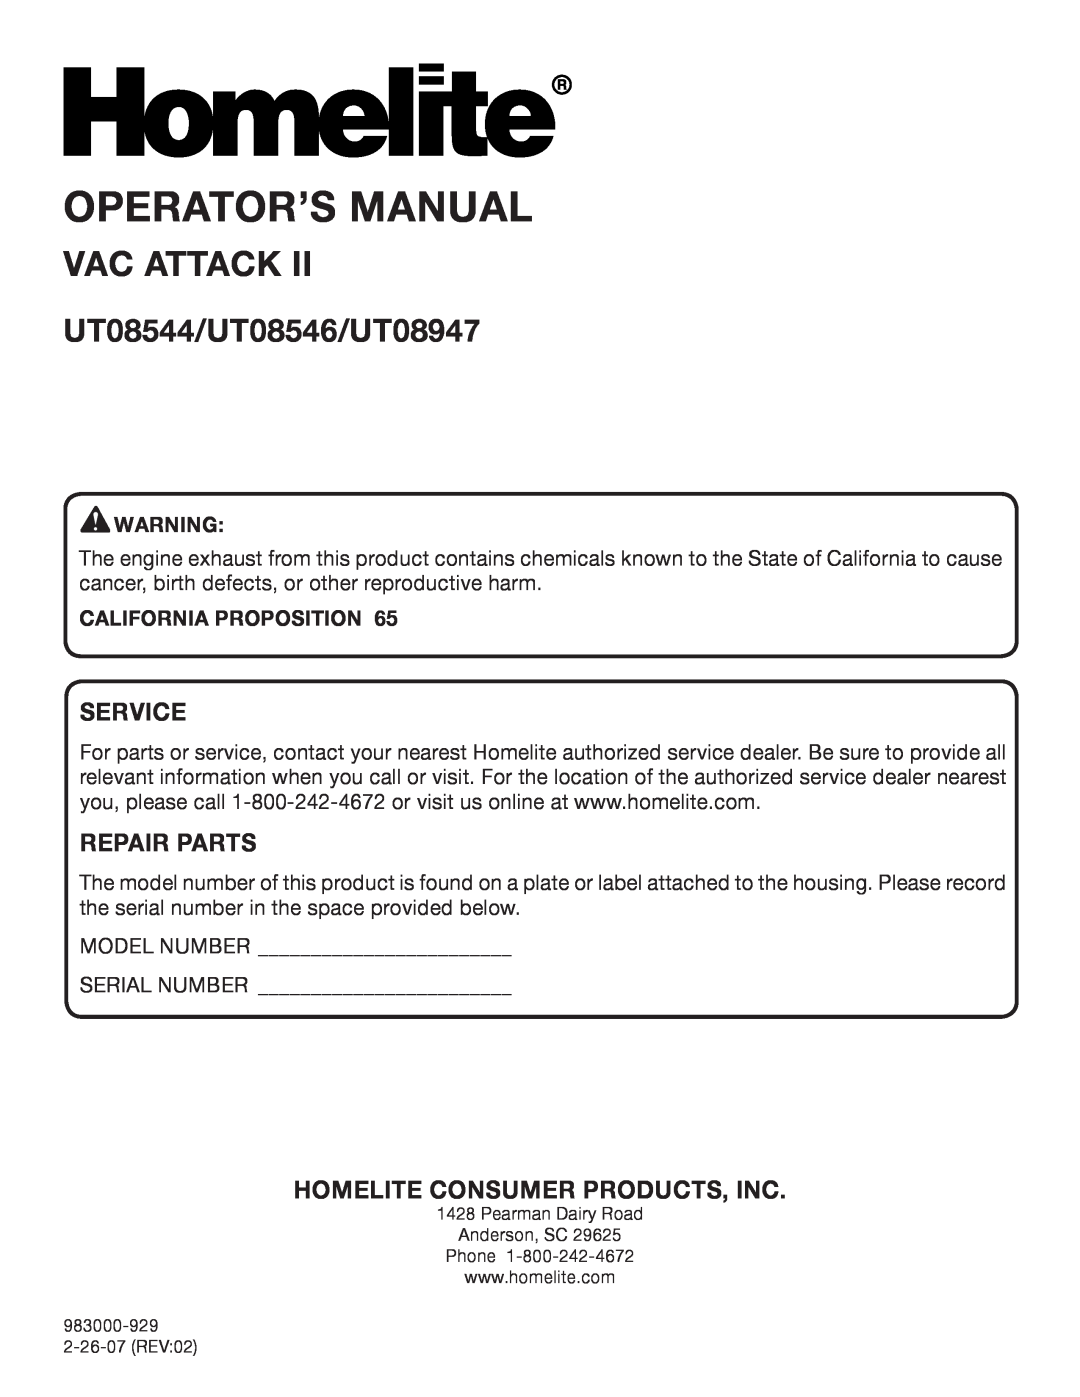 Homelite UT08947 manual Service, Repair Parts, Homelite Consumer Products, Inc, Operator’S Manual, Vac Attack 